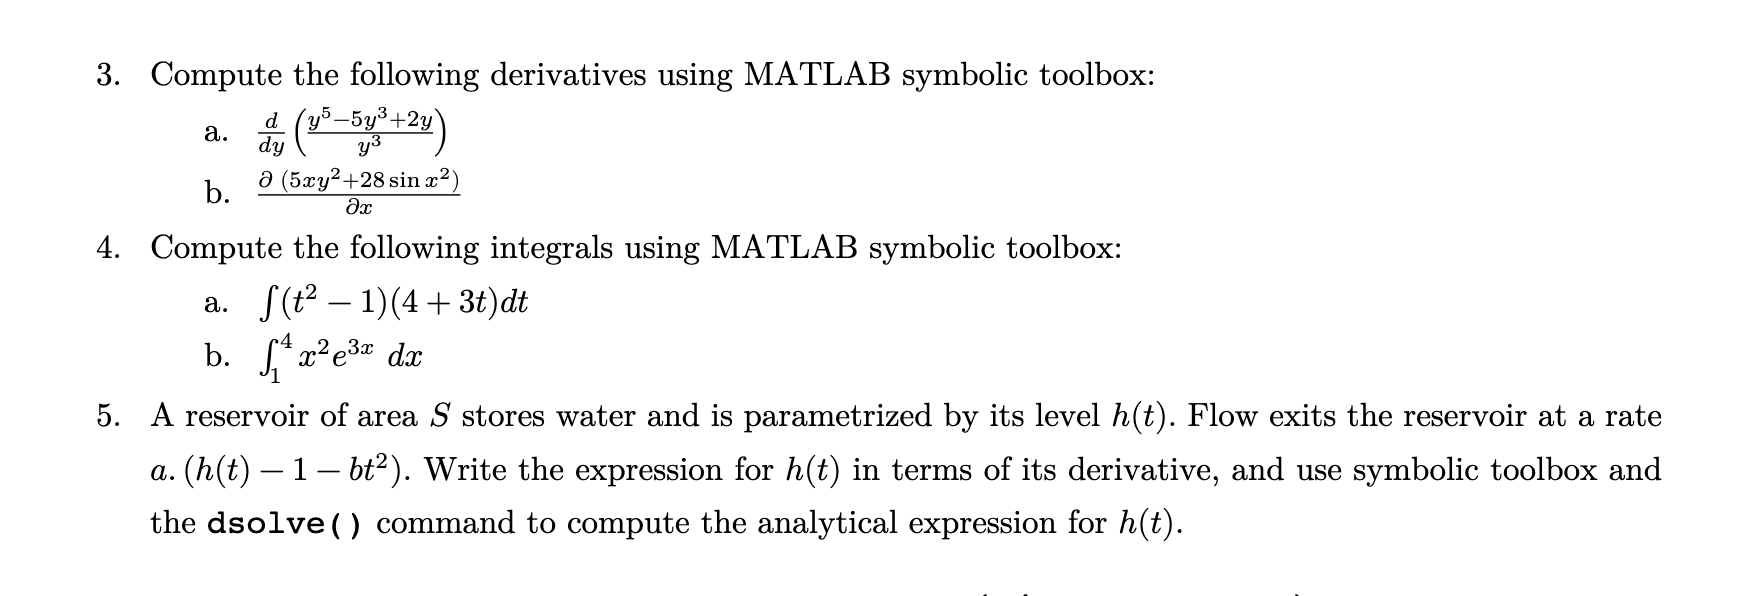 matlab symbolic toolbox price